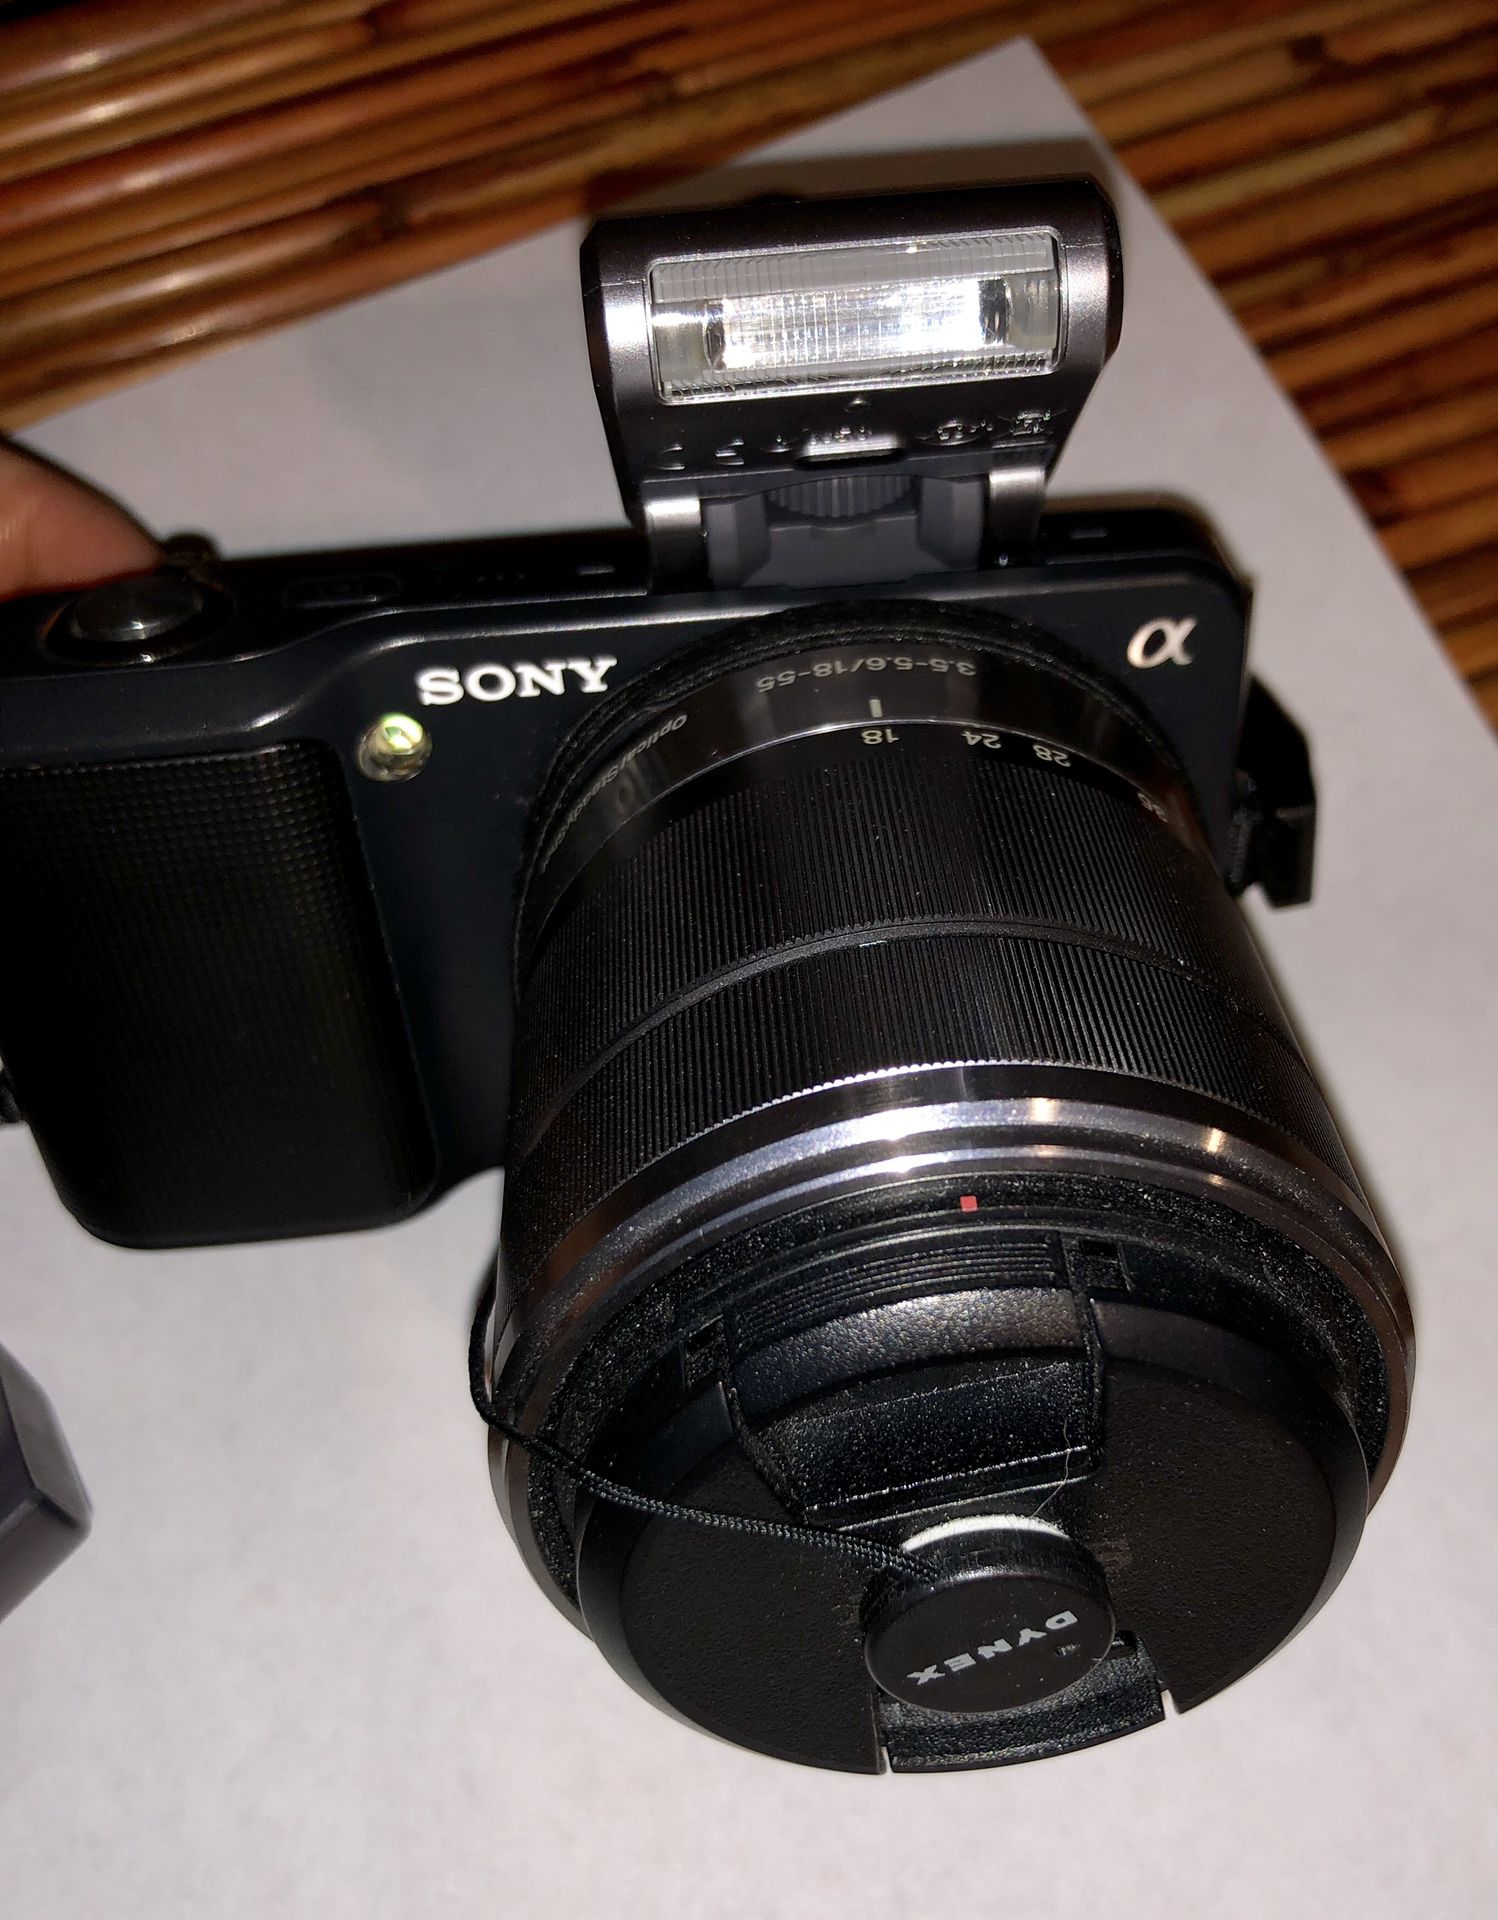 Sony Alpha Nex 3 mirrorless digital camera, plenty of extras!